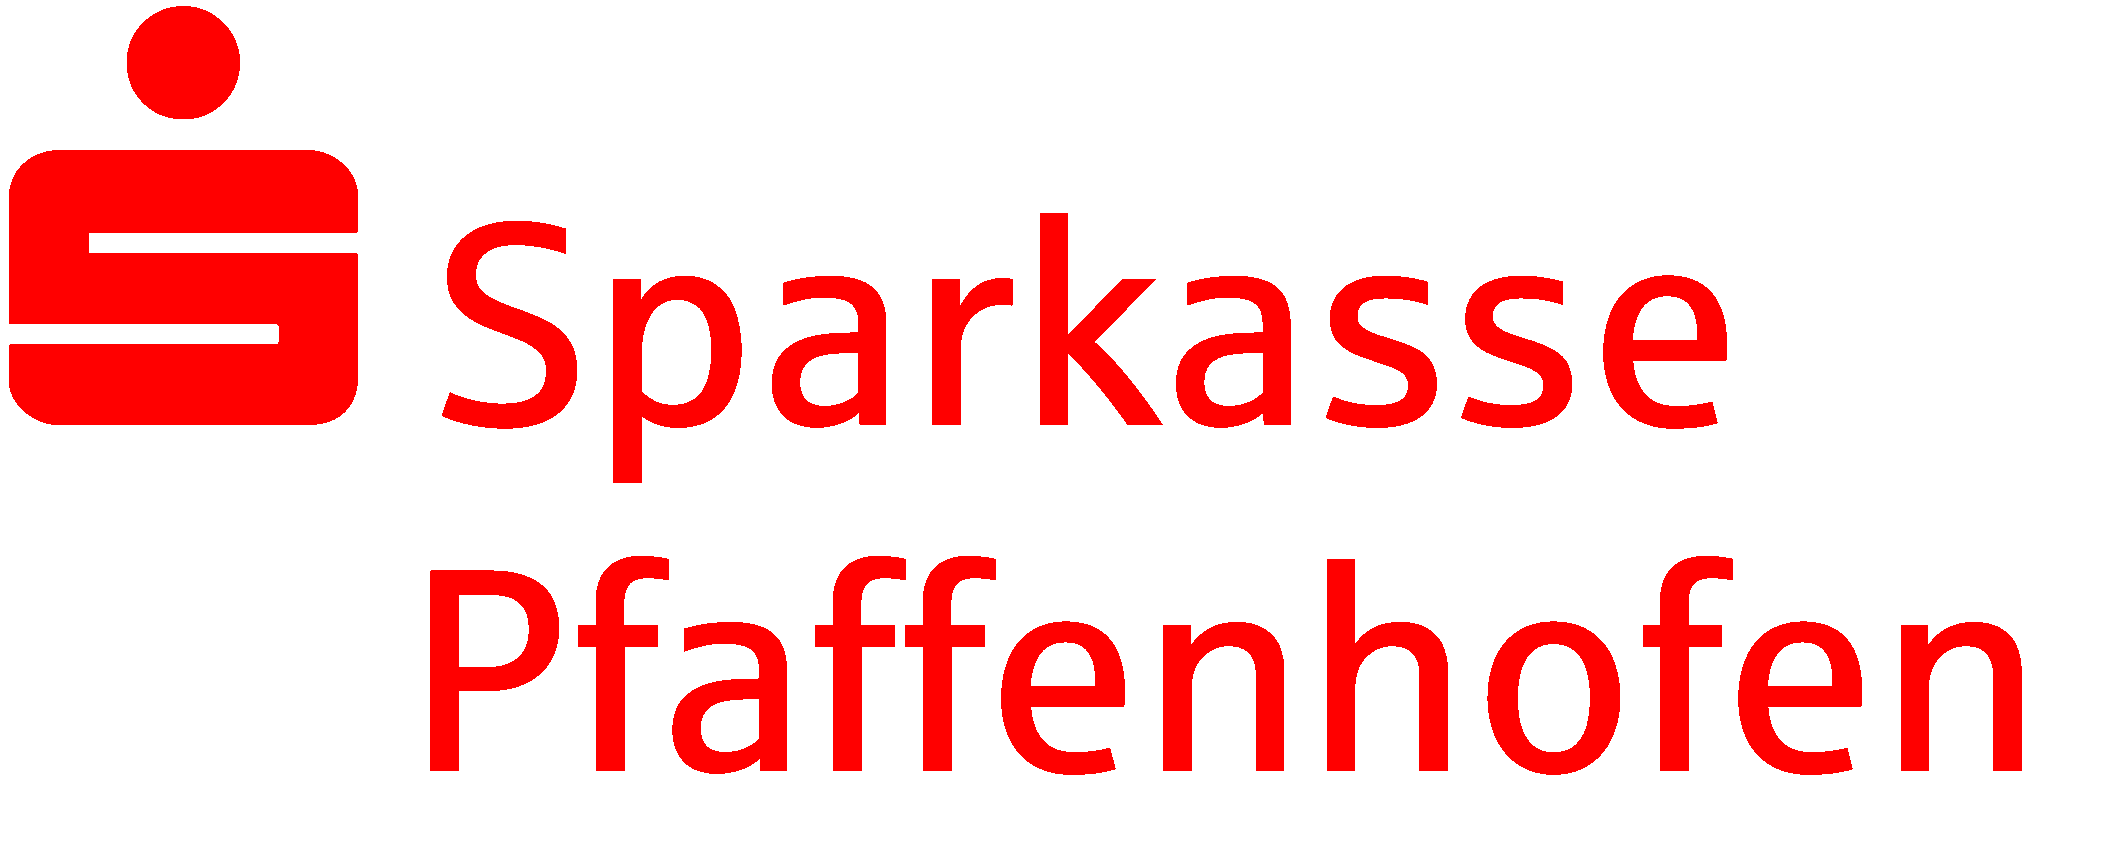 Sparkasse Pfaffenhofen 2